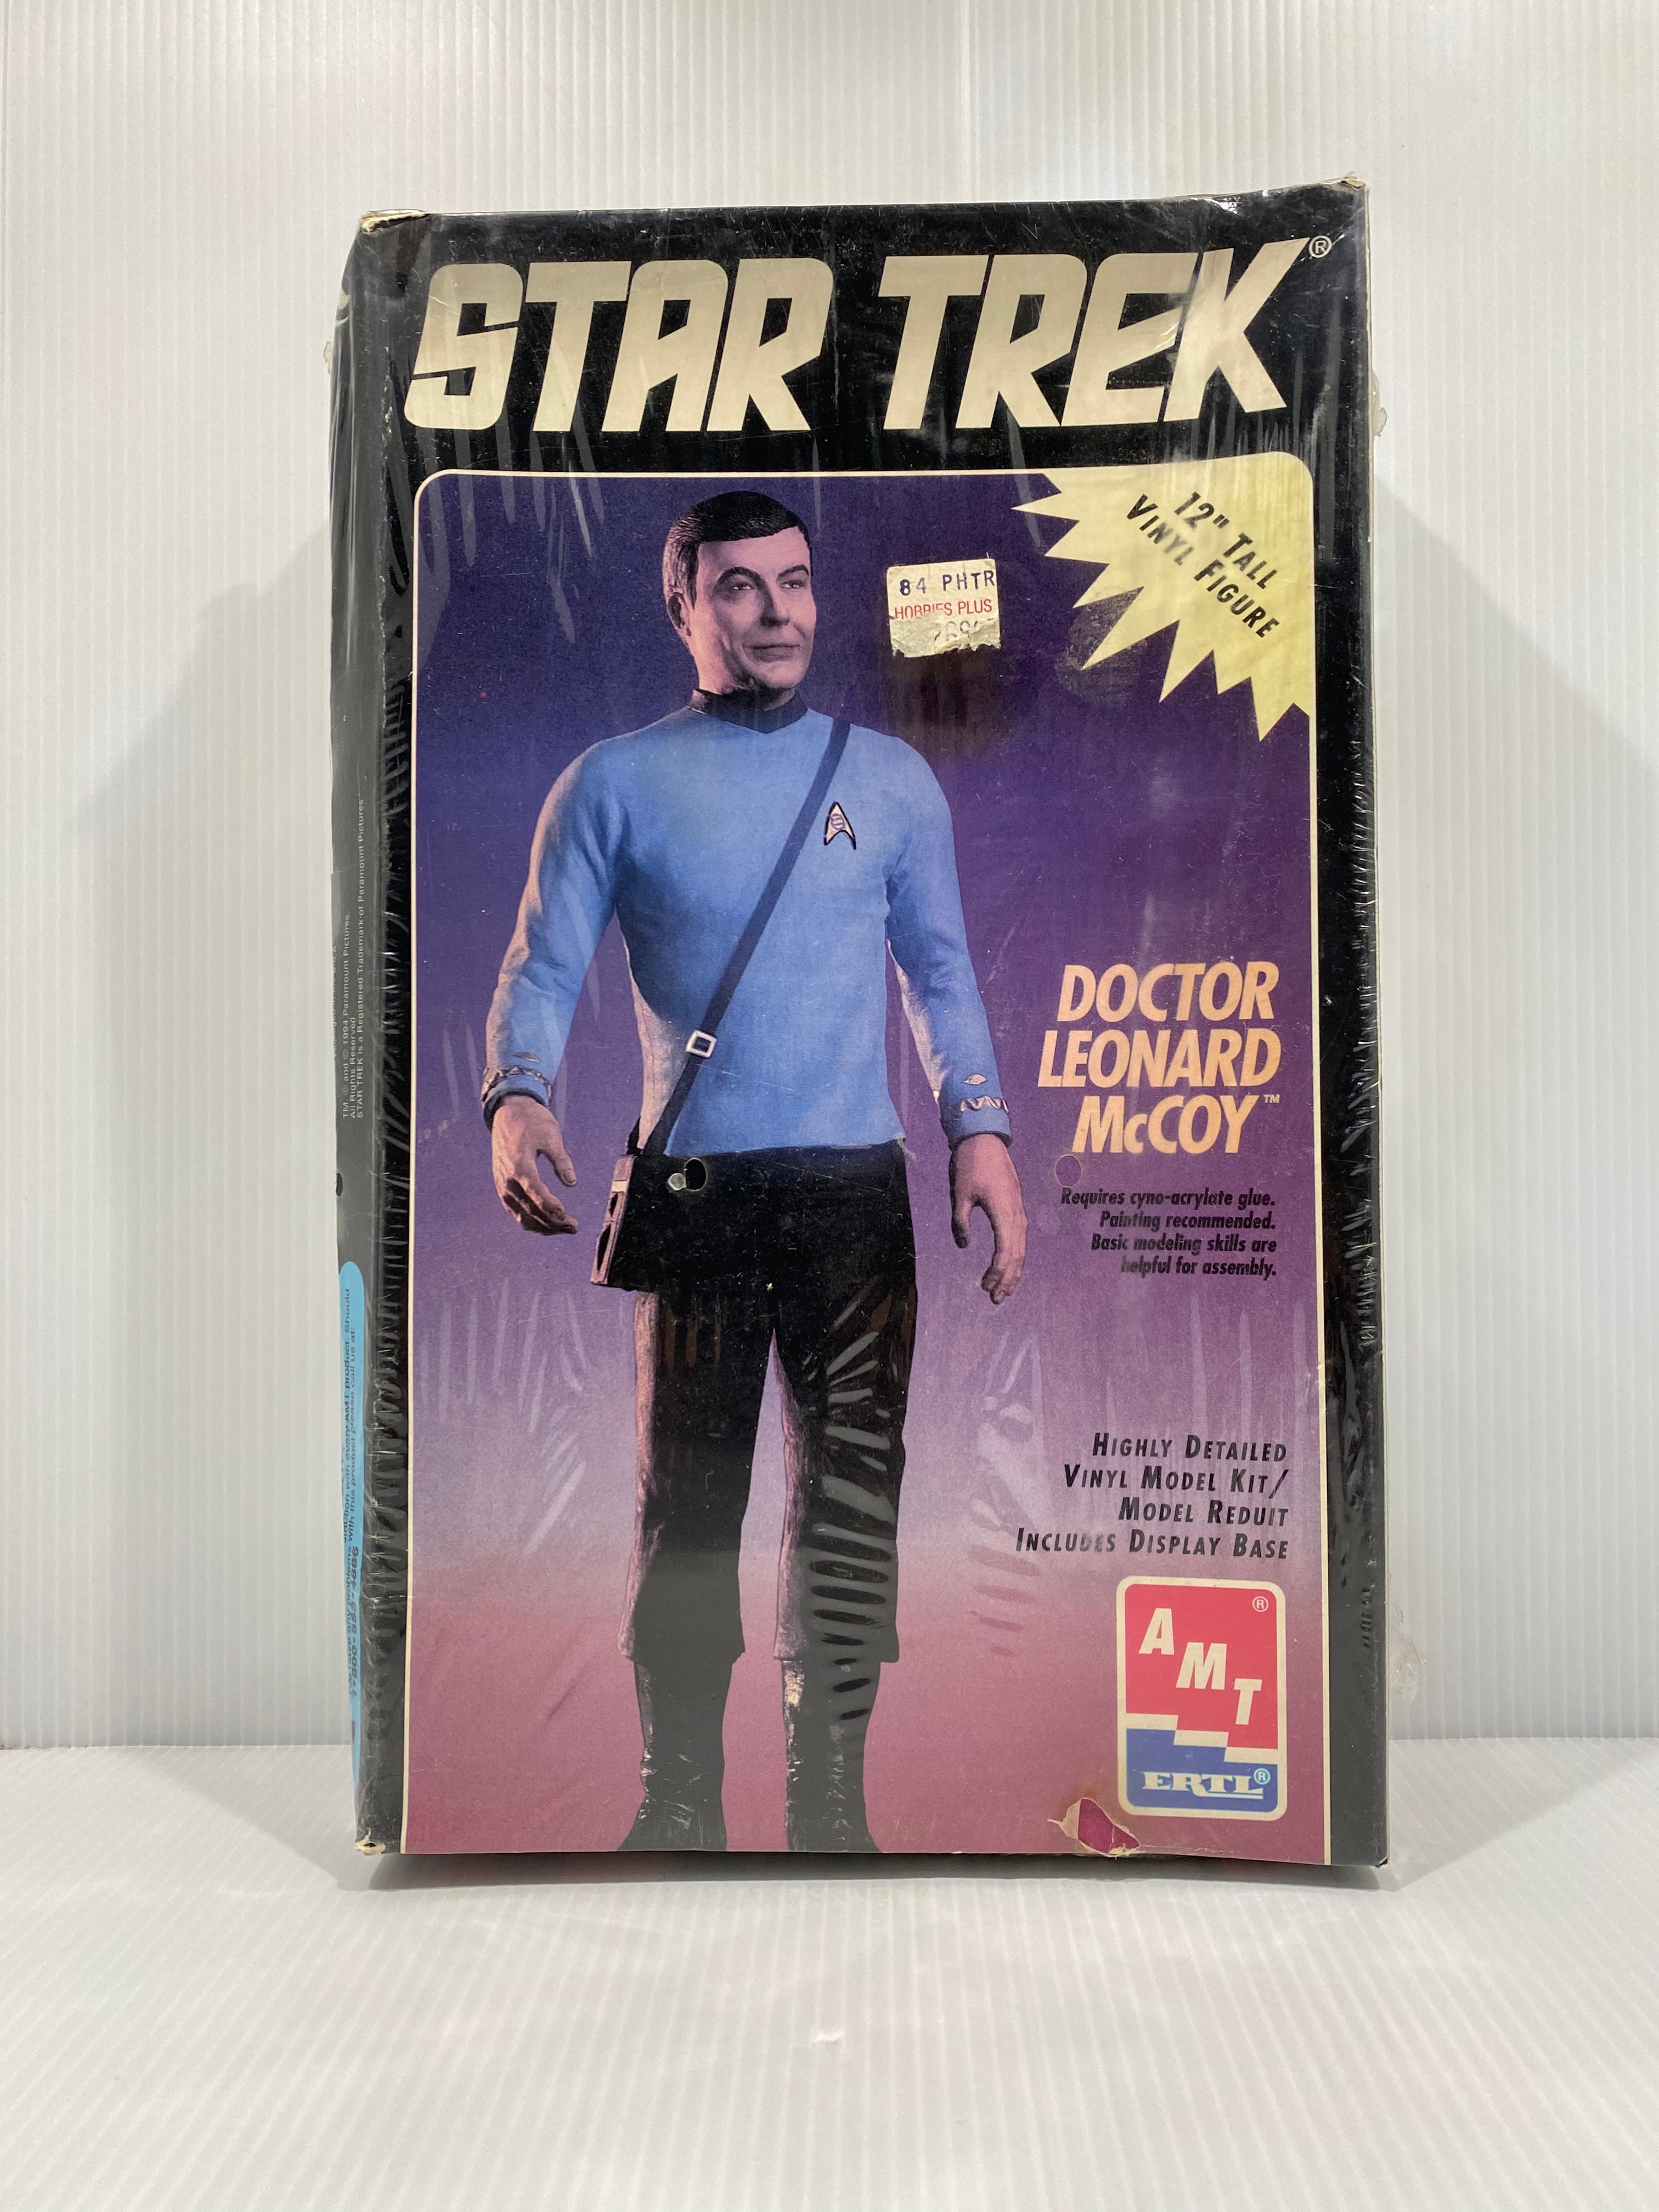 3 x Vintage ERTL Star Trek vinyl figure. 1994